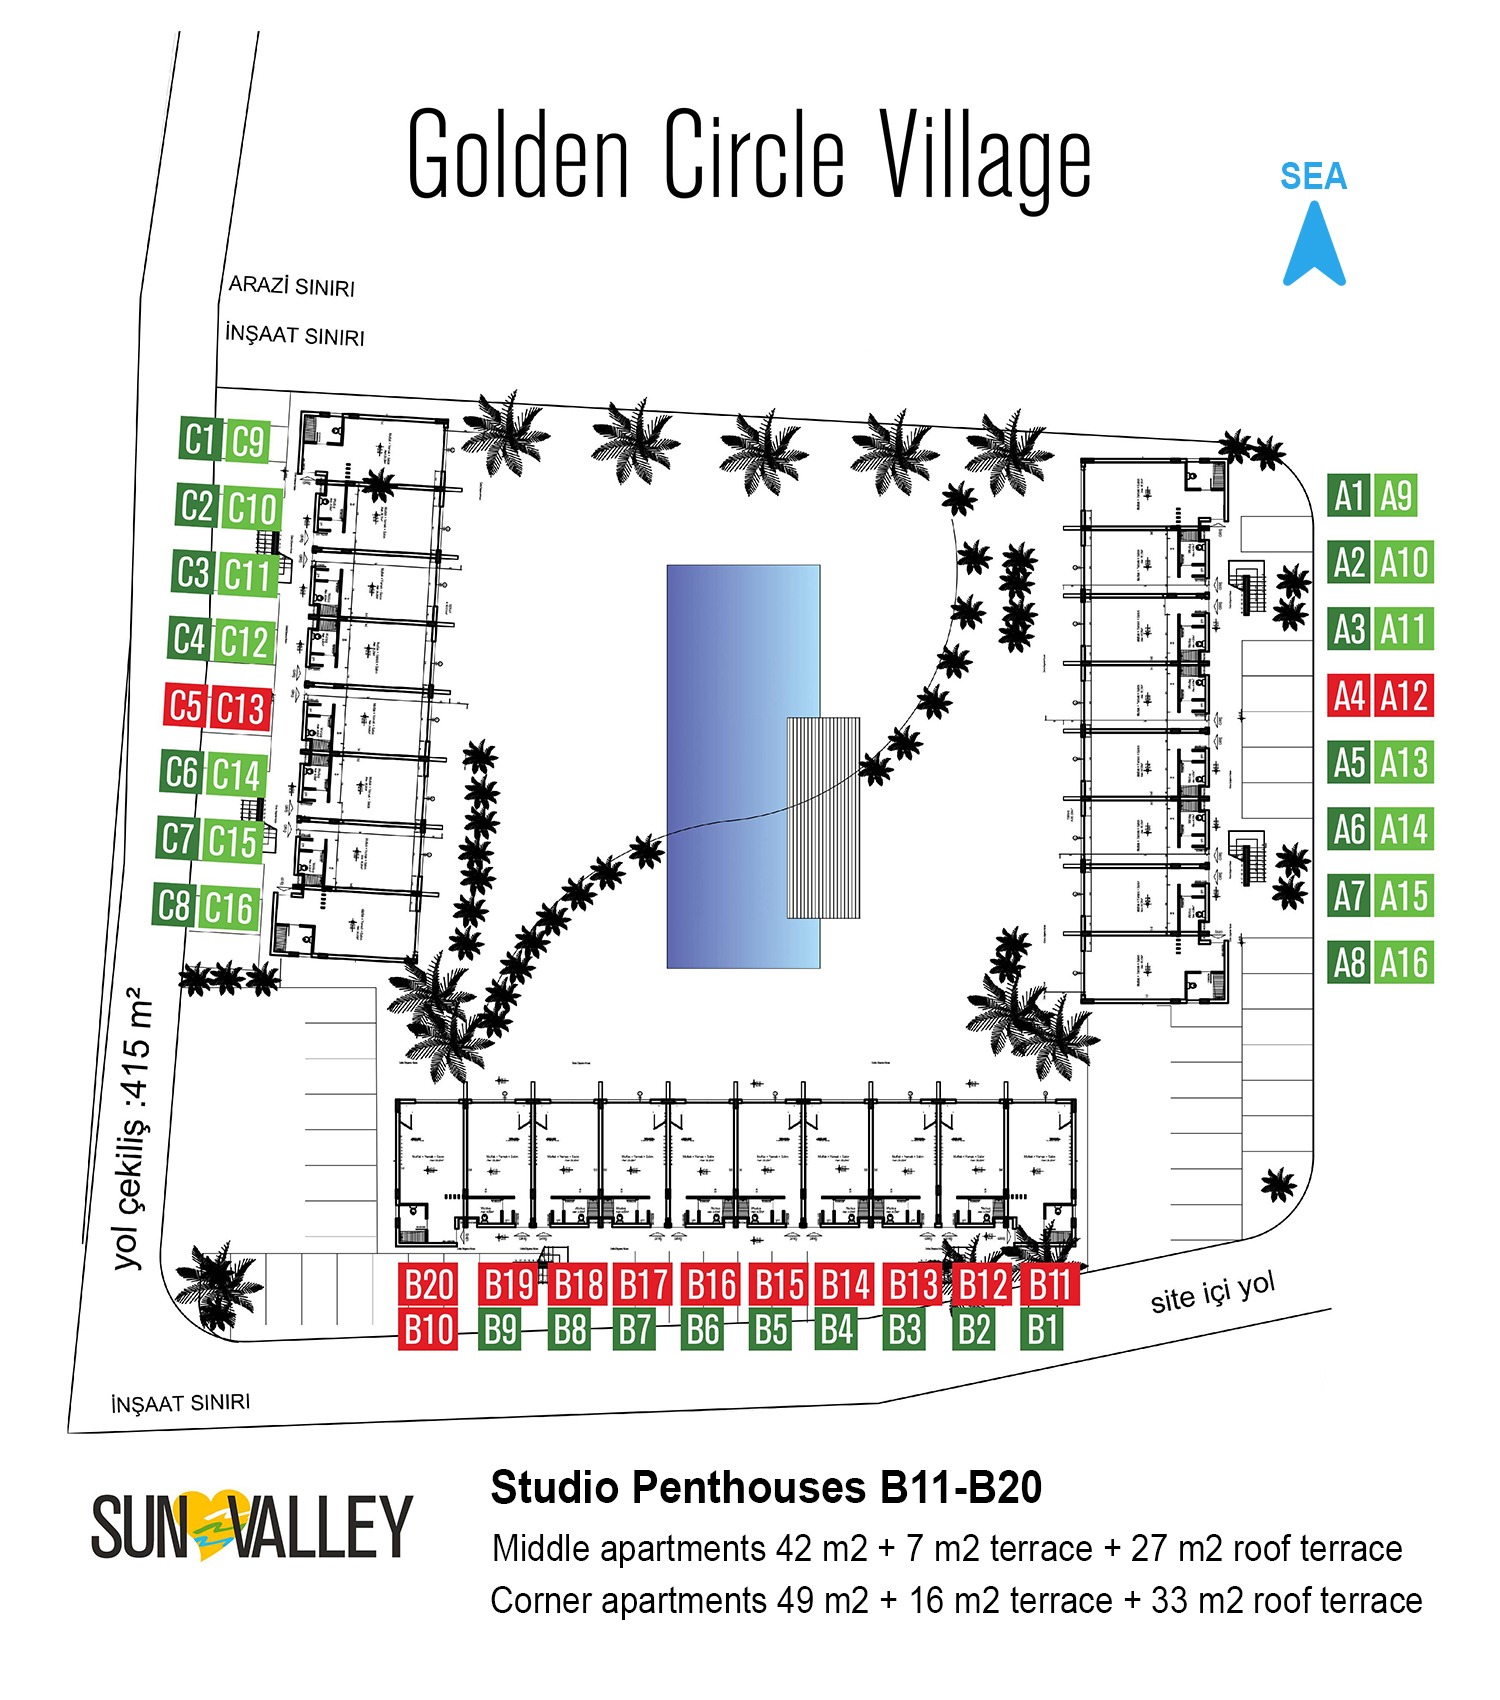 Site Plan - Golden Circle Village